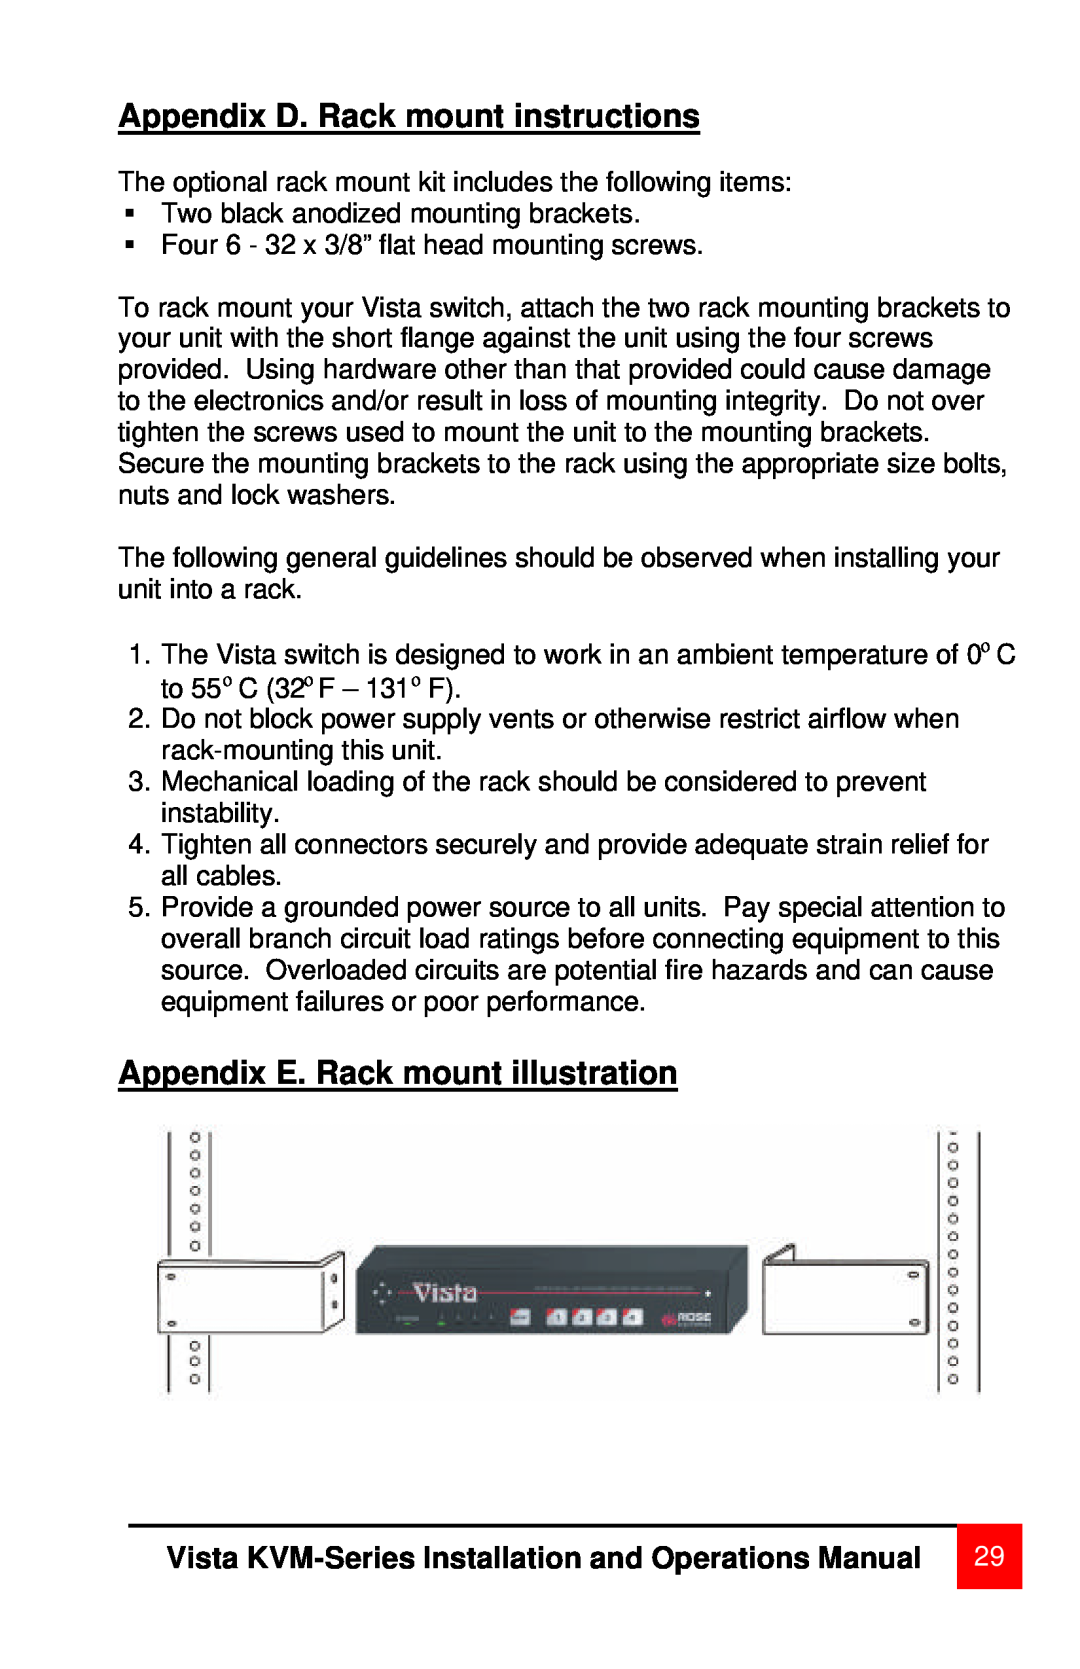 Rose electronic MAN-V8 manual Appendix D. Rack mount instructions, Appendix E. Rack mount illustration 